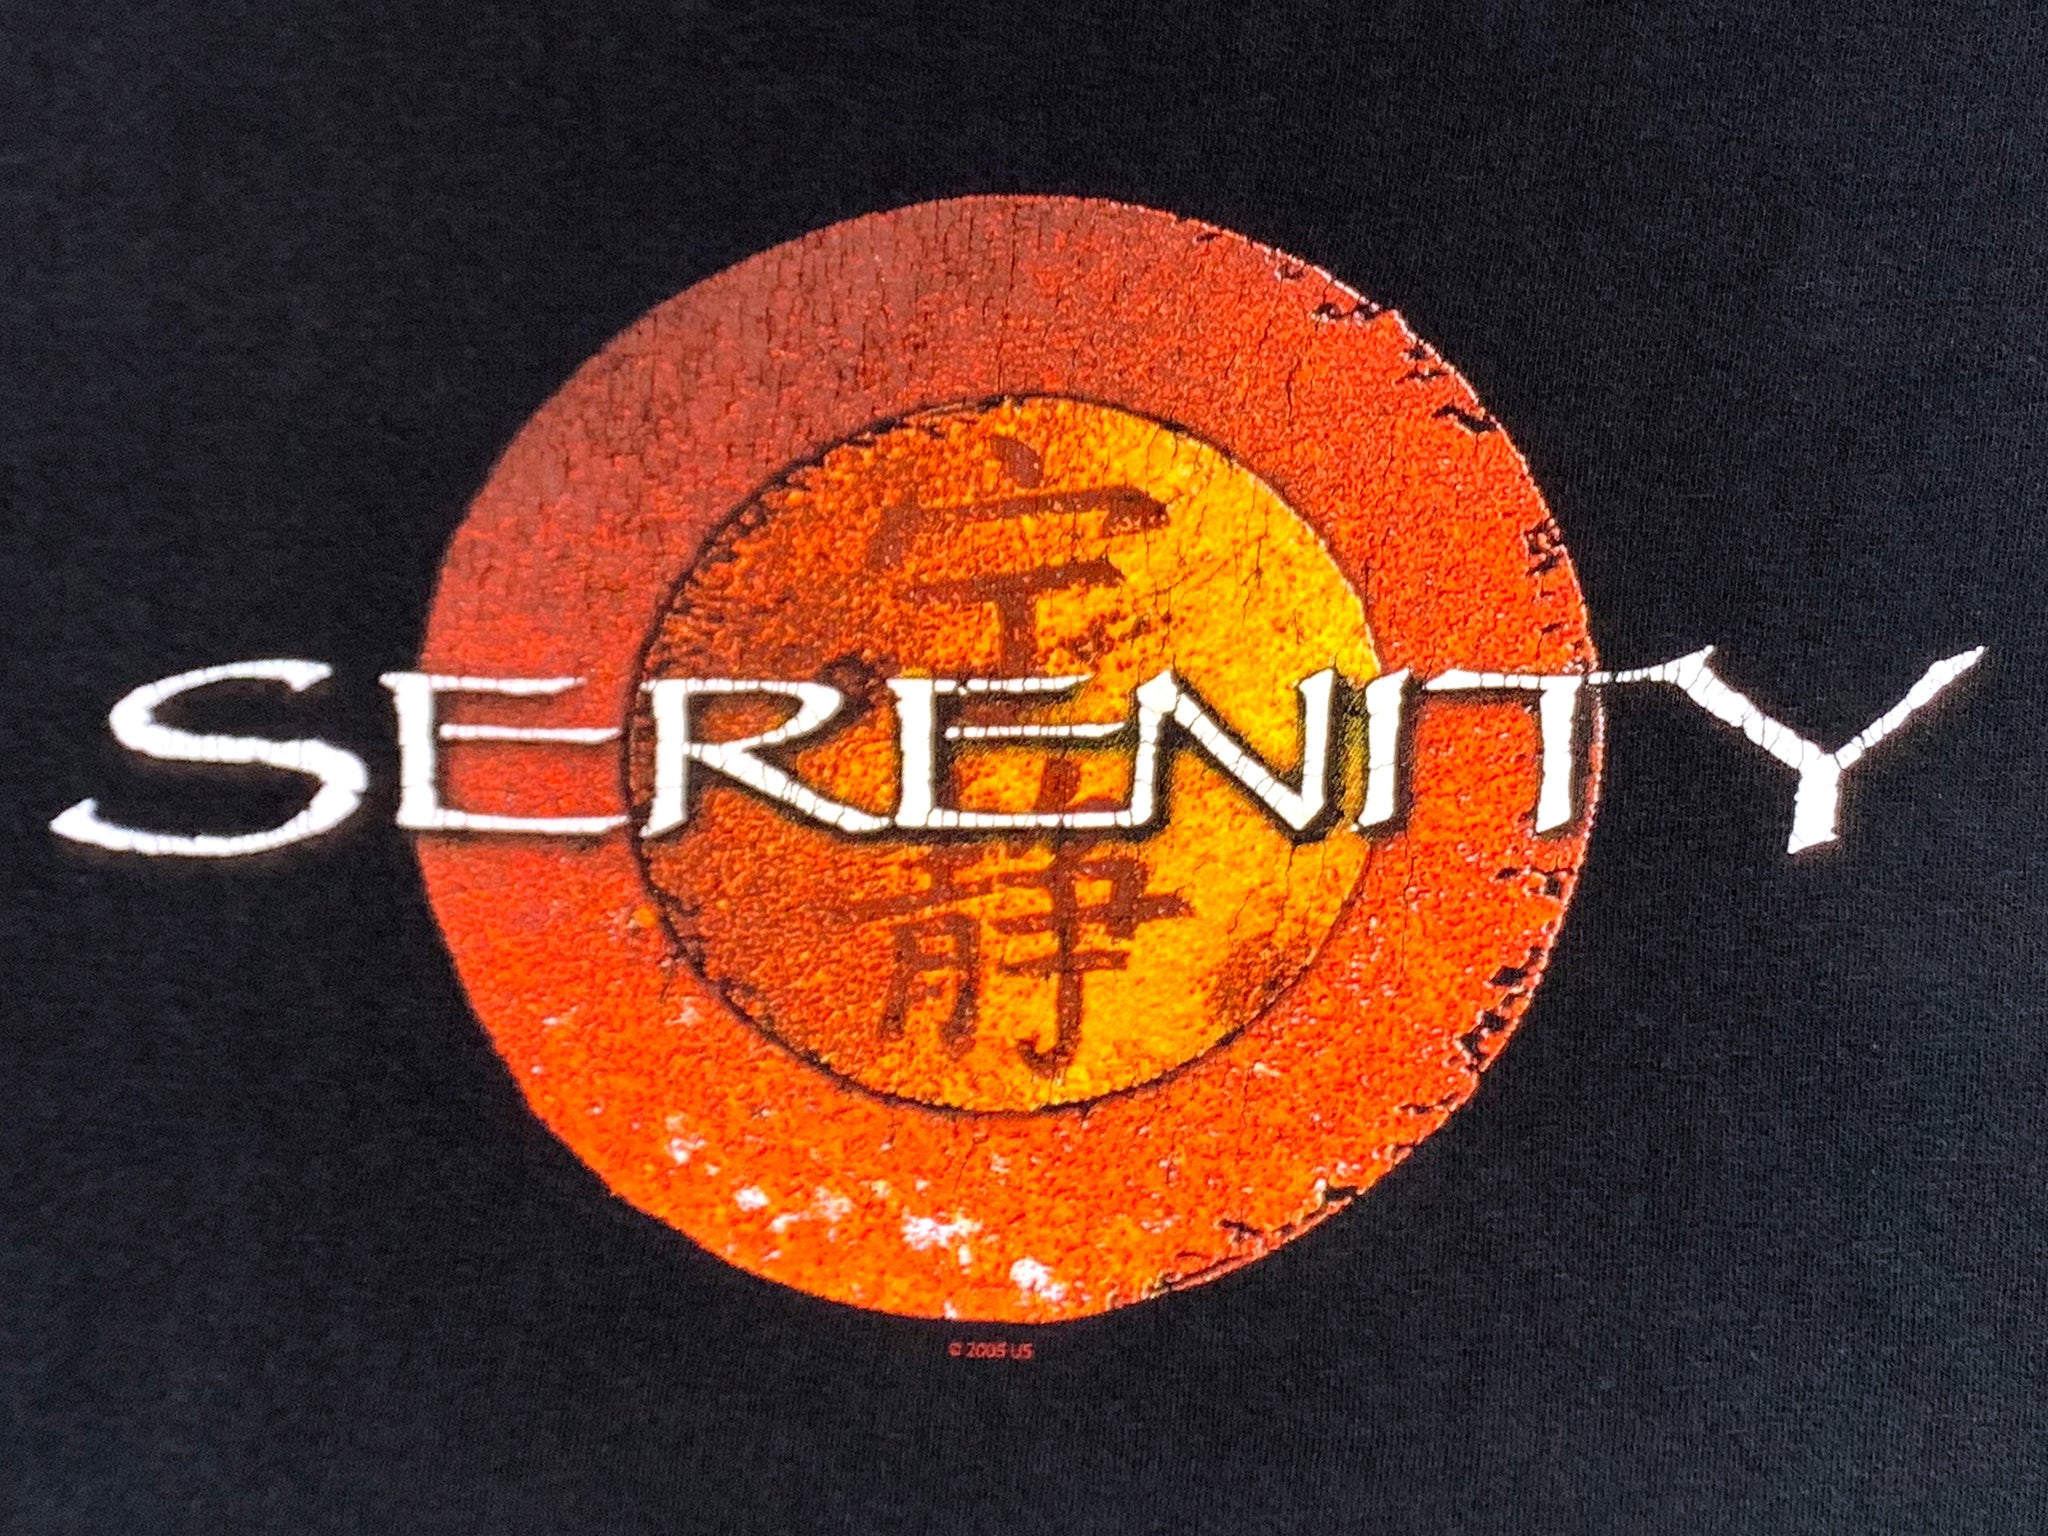 Serenity TV Show T-Shirt